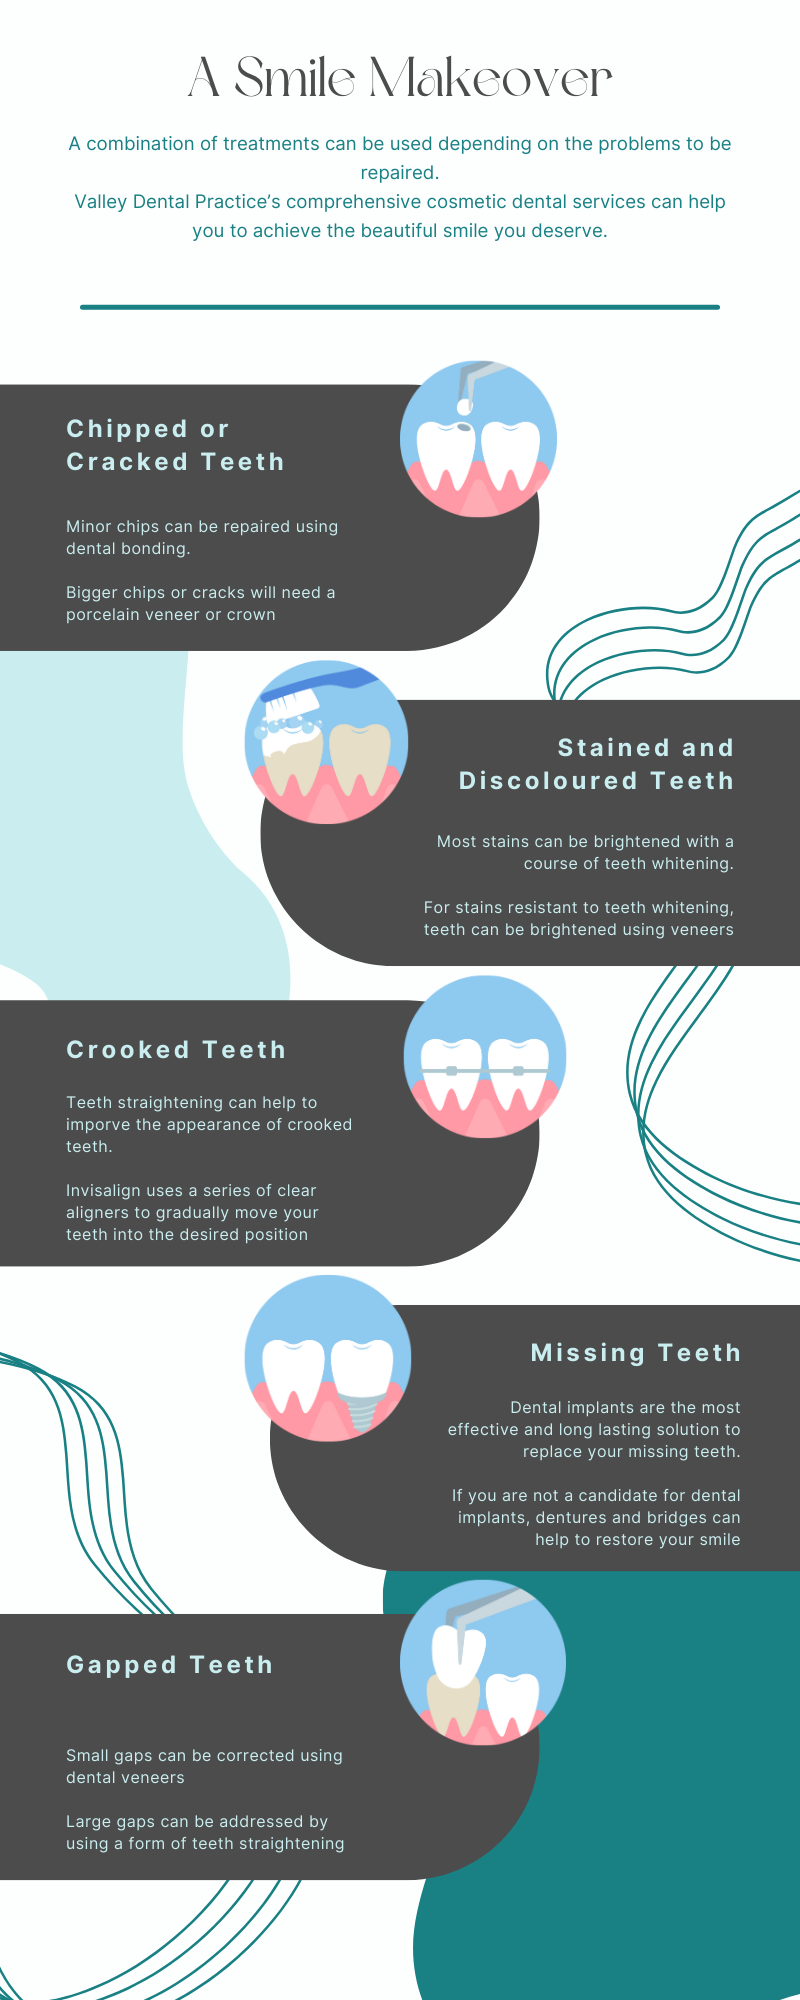 Smile Makeover infographic - Valley Dental